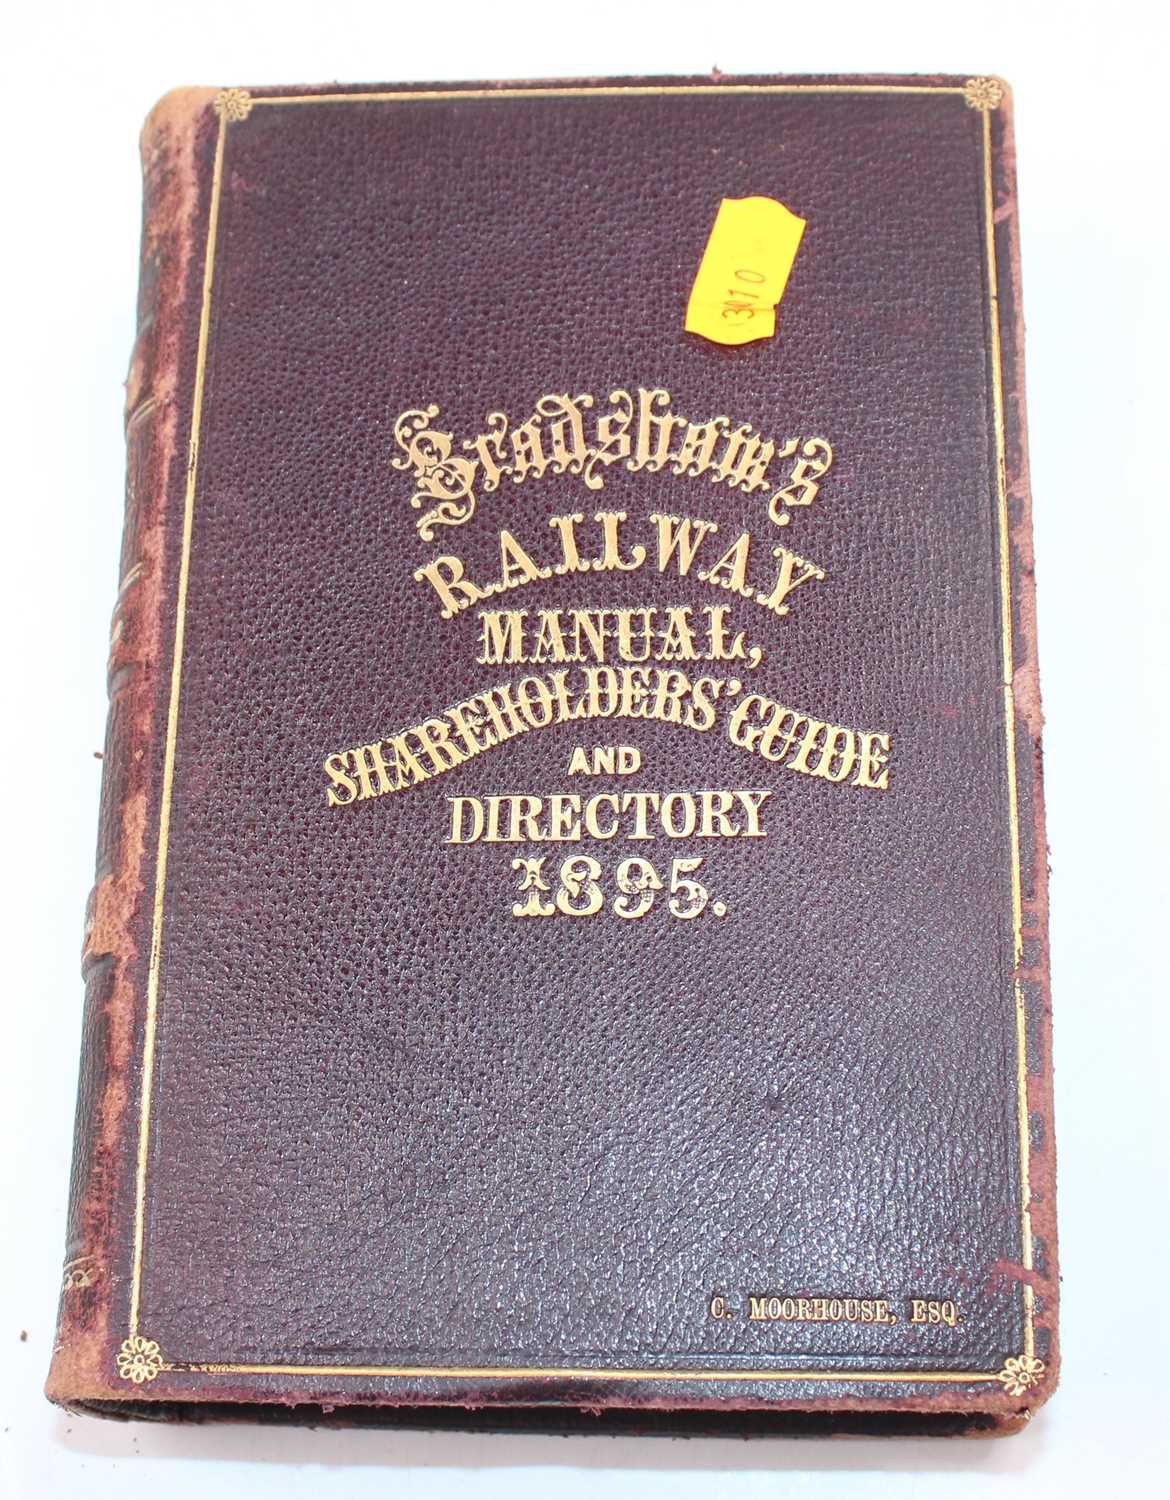 Lot 28 - Bradshaw's Railway Manual 1895, a...